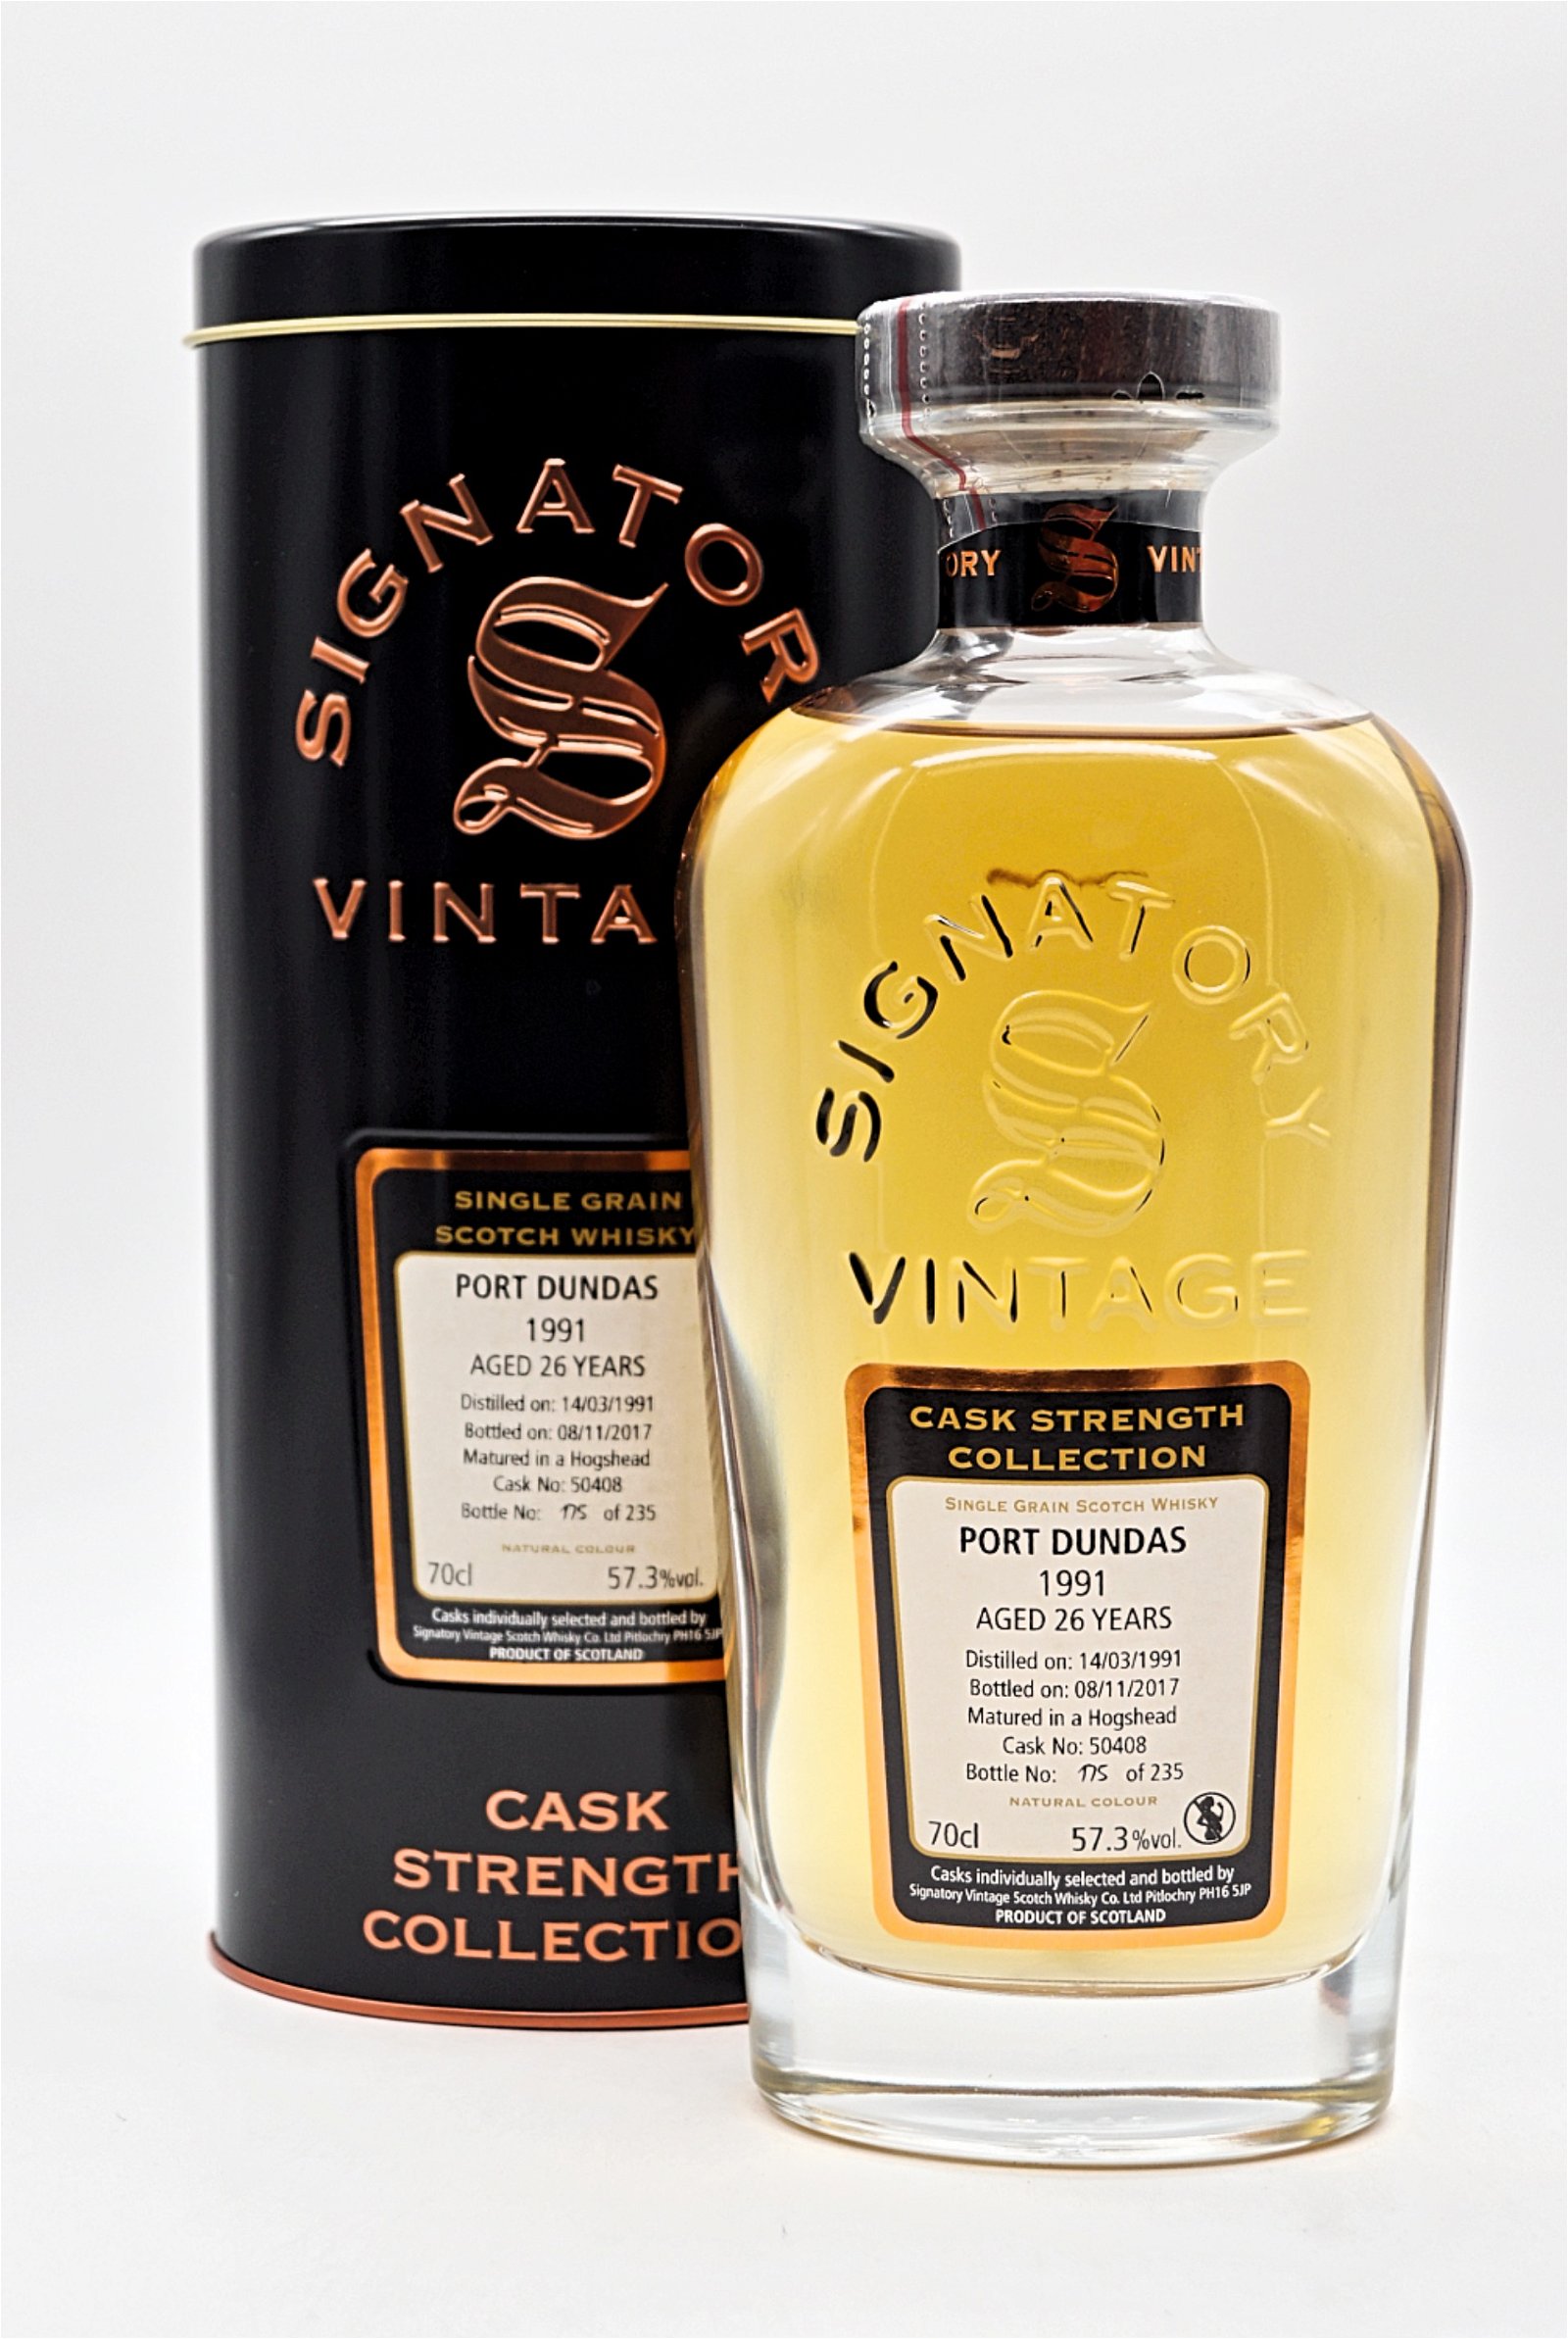 Signatory Vintage Cask Strength Collection Port Dundas 26 Jahre 1991/2017 Cask 50408 Single Grain Scotch Whisky